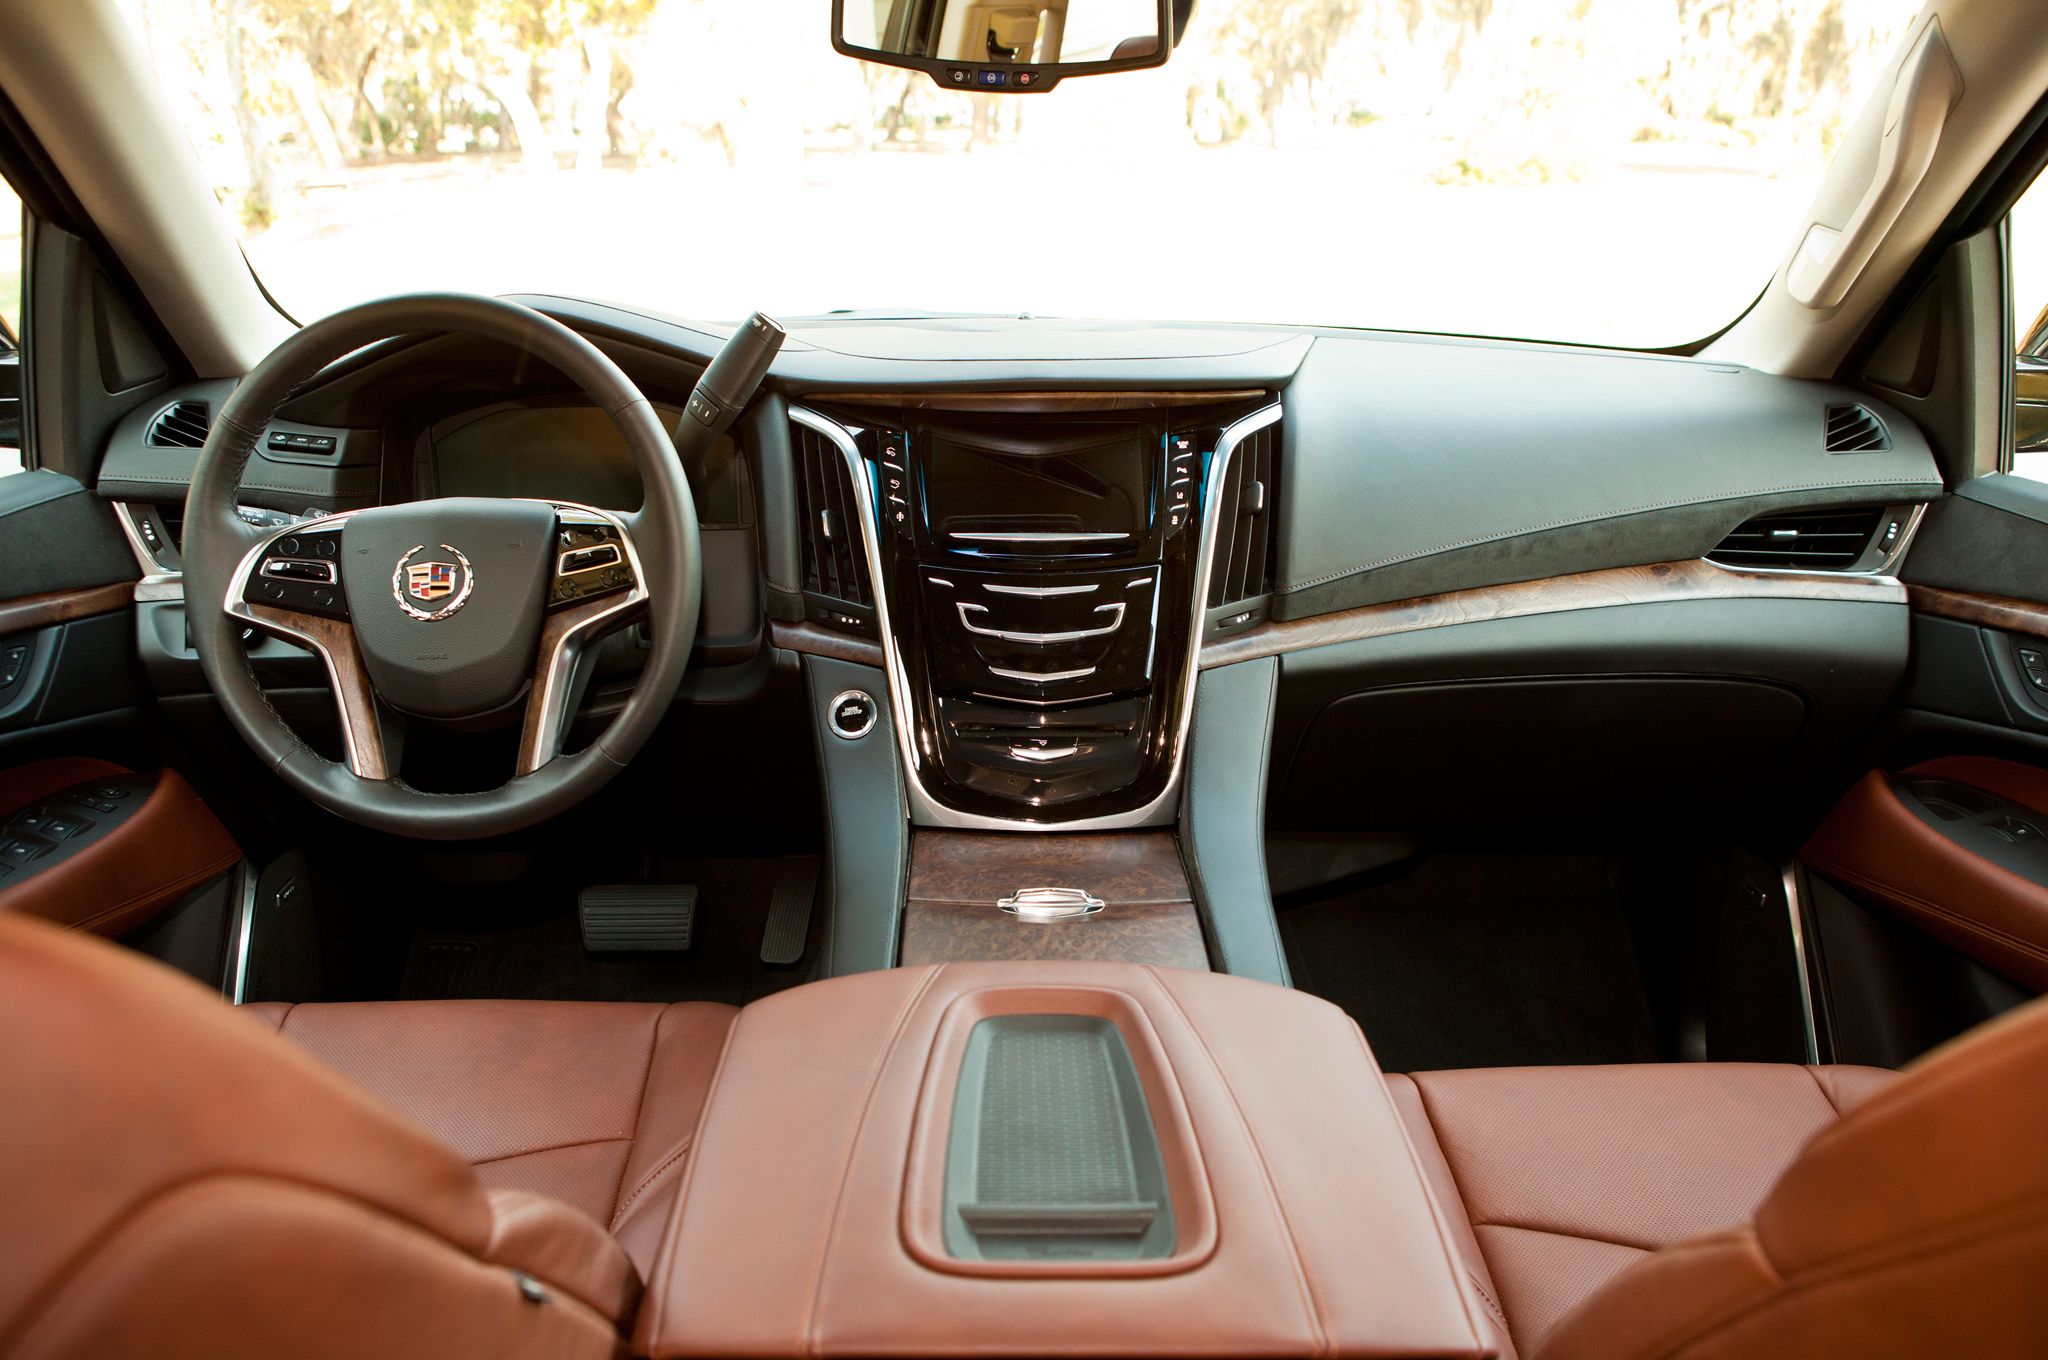 2015 Cadillac Escalade Interior View (View 9 of 14)